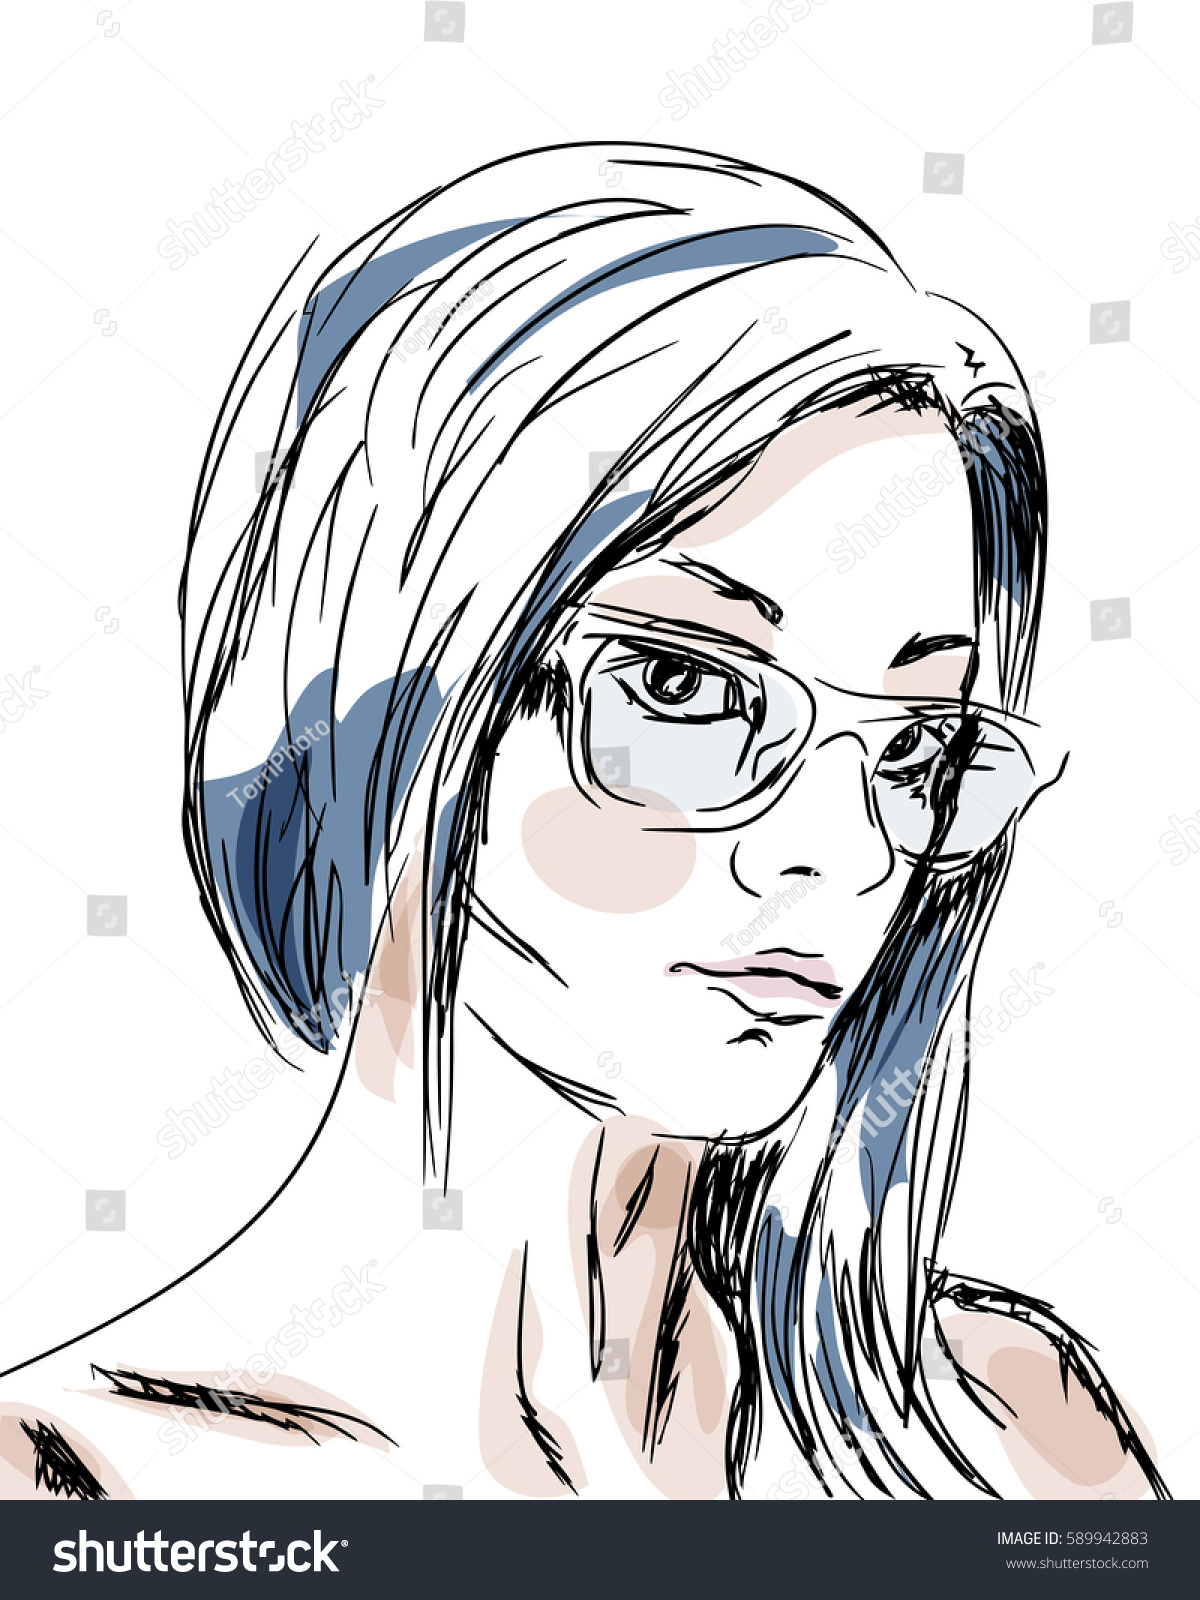 https://www.shutterstock.com/image-vector/hand-drawn-sketch-girl-portrait-vector-589942883